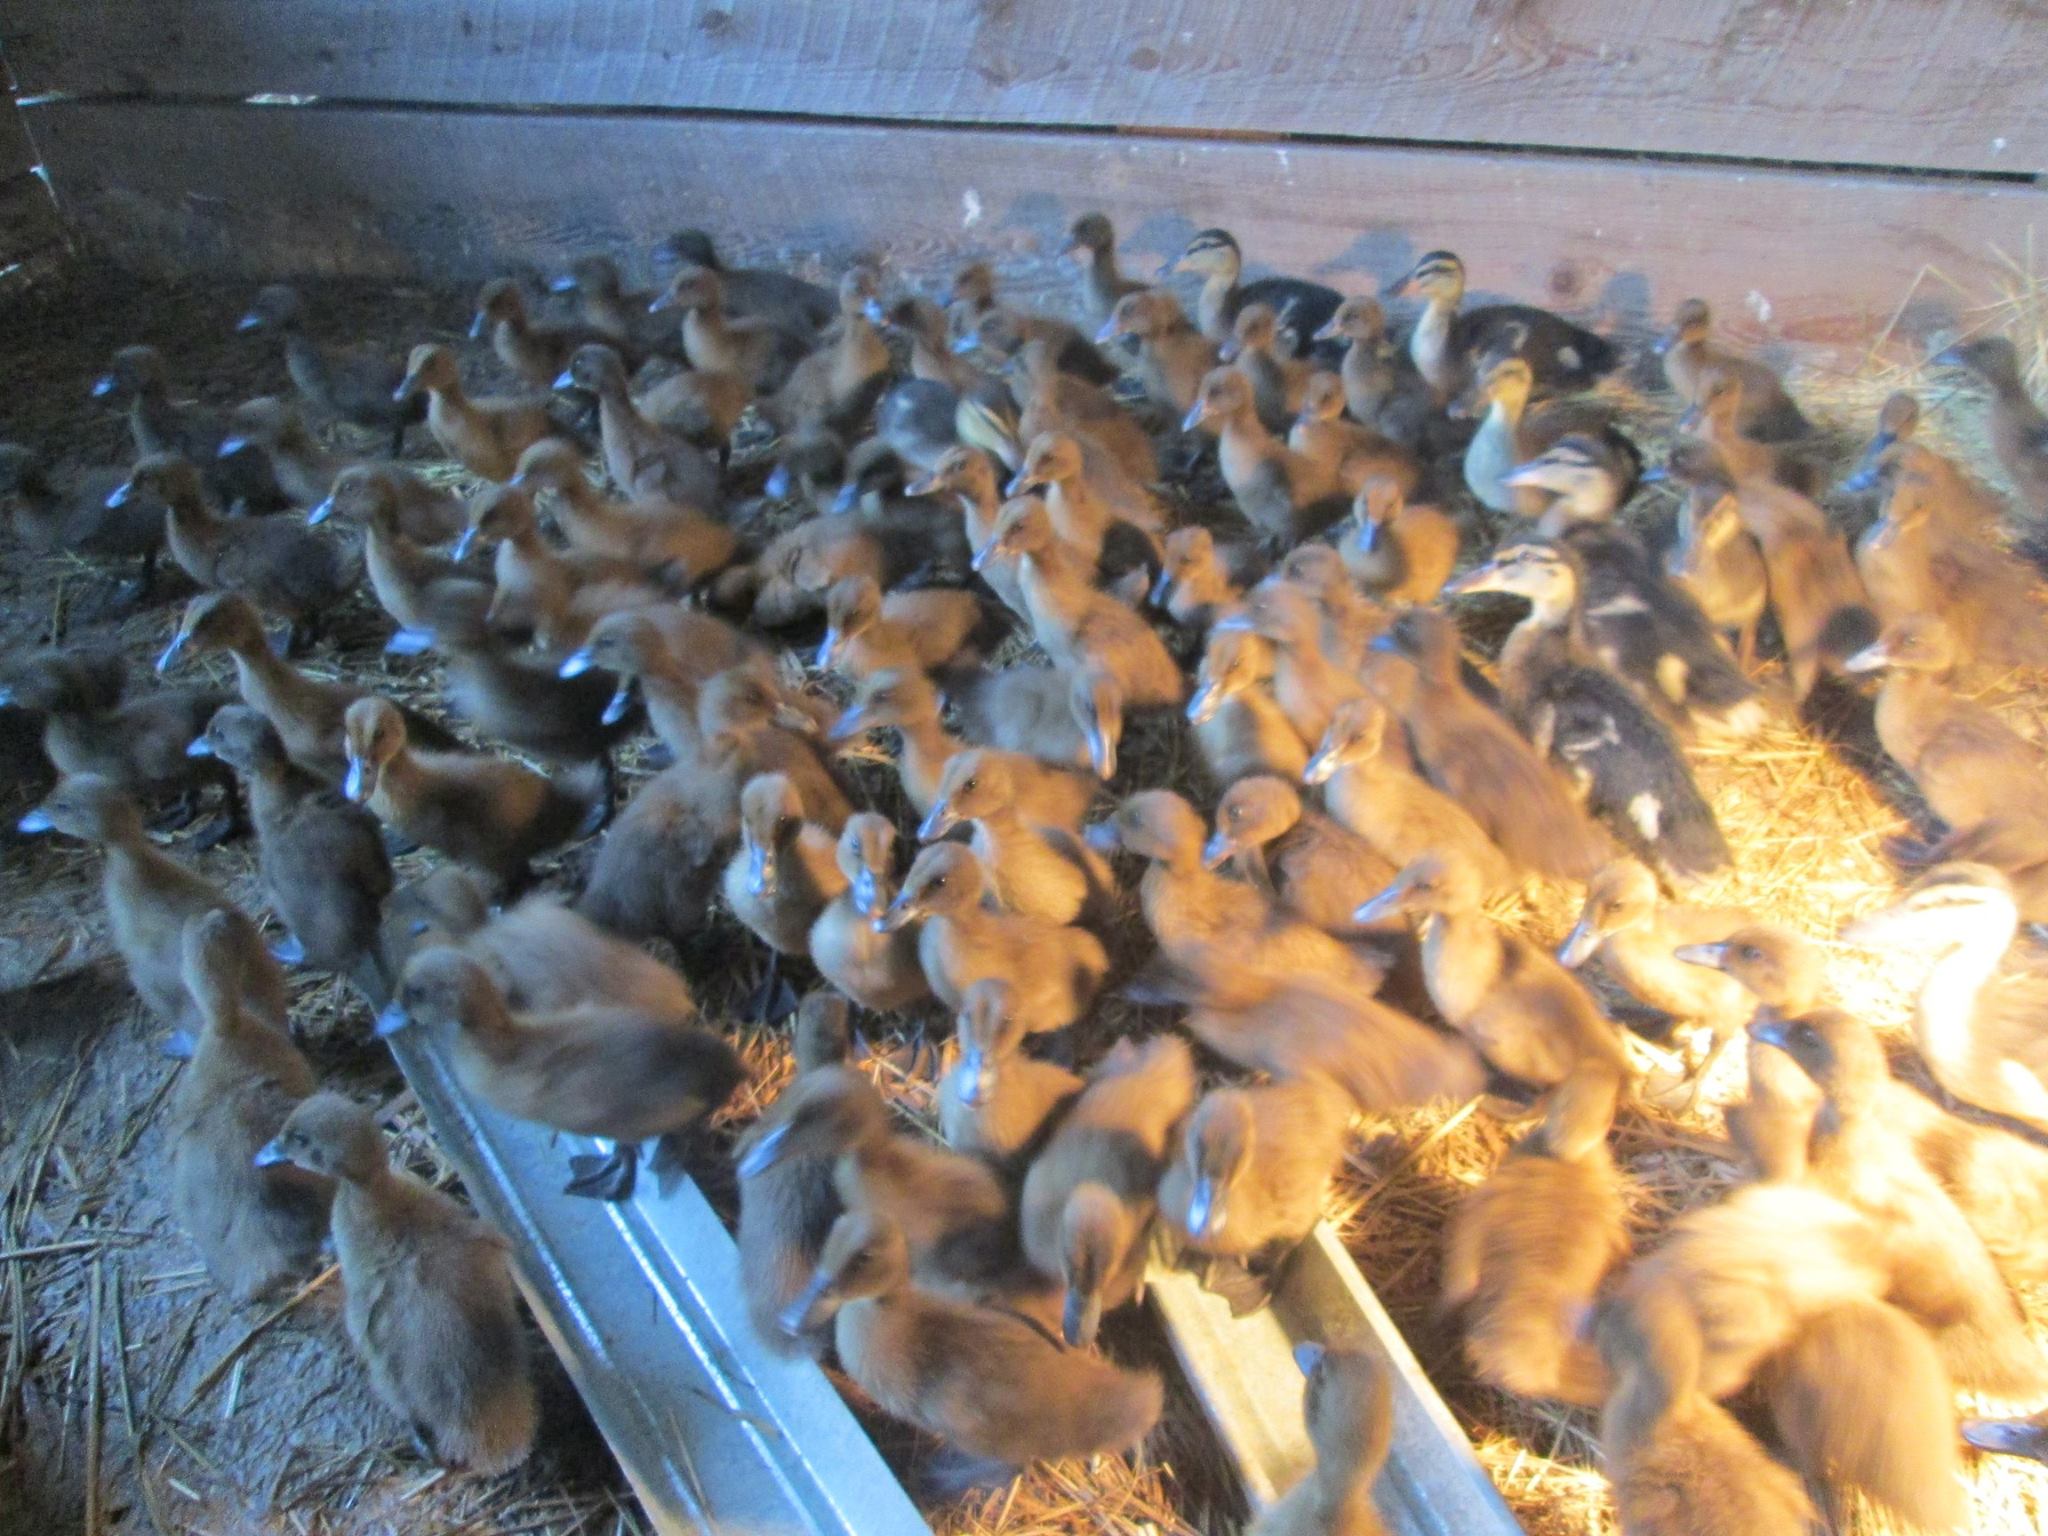 ducks in incubator.jpg